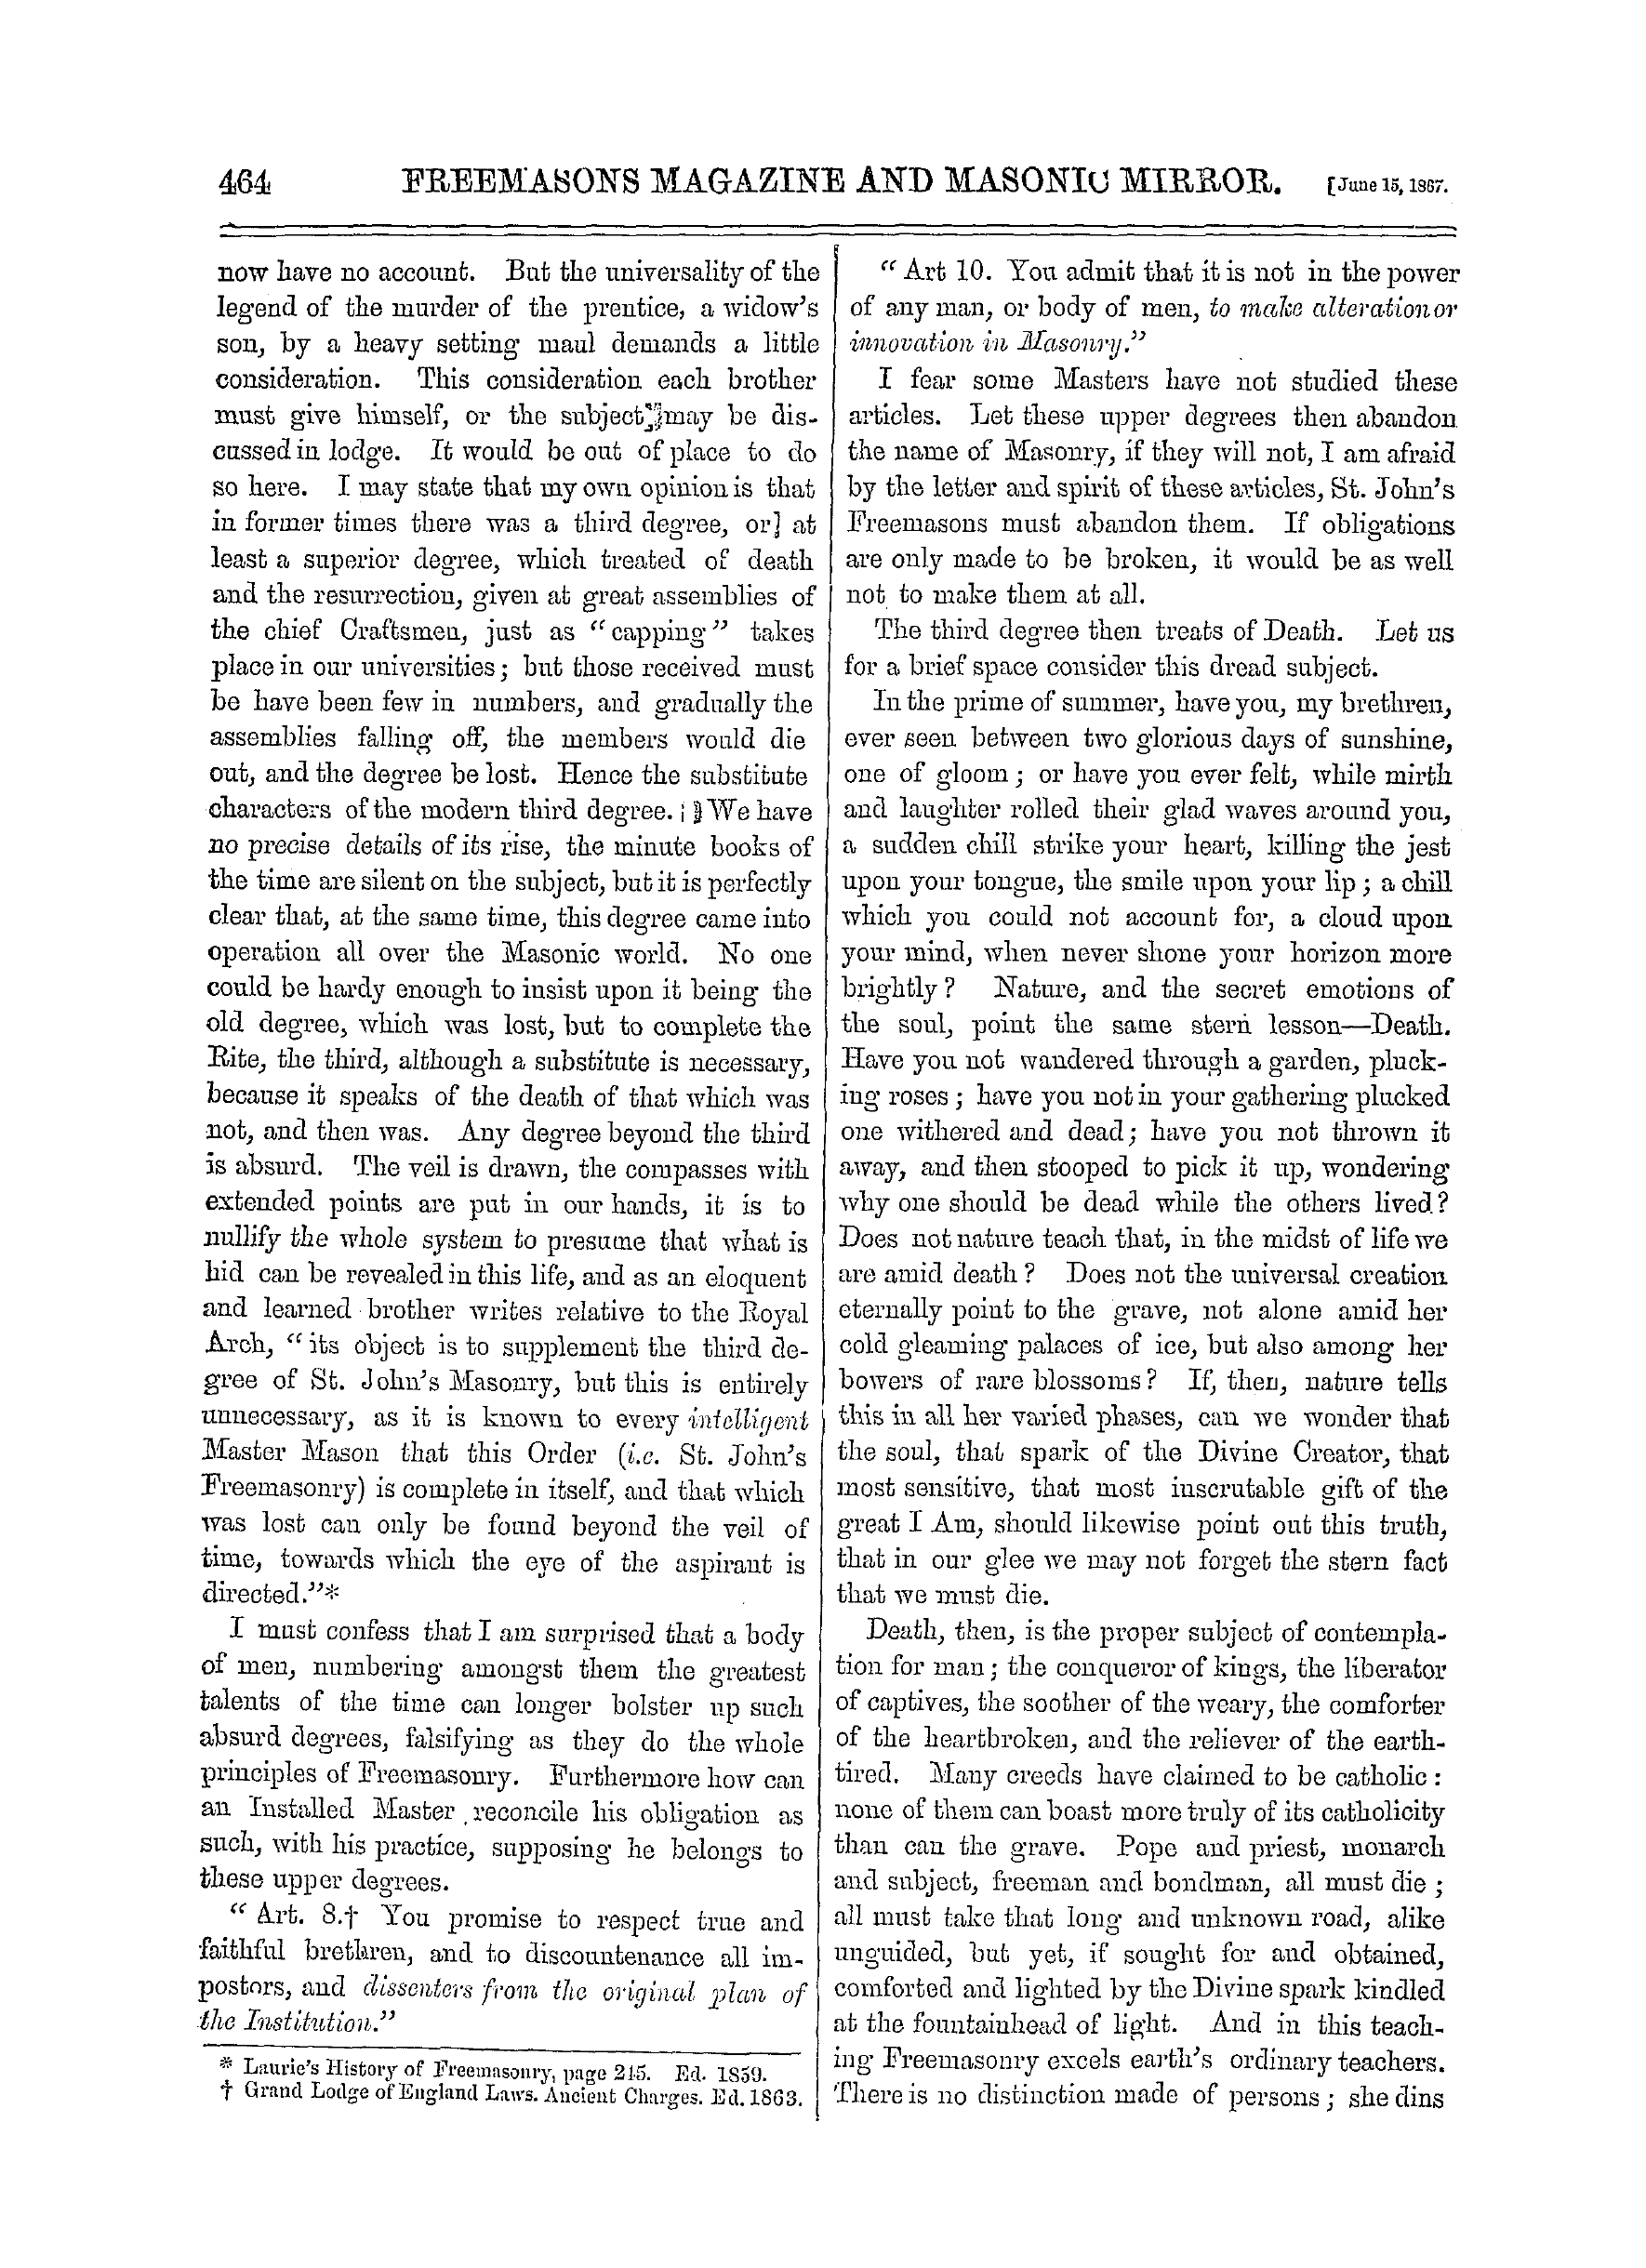 The Freemasons' Monthly Magazine: 1867-06-15 - Freemasonry Considered.